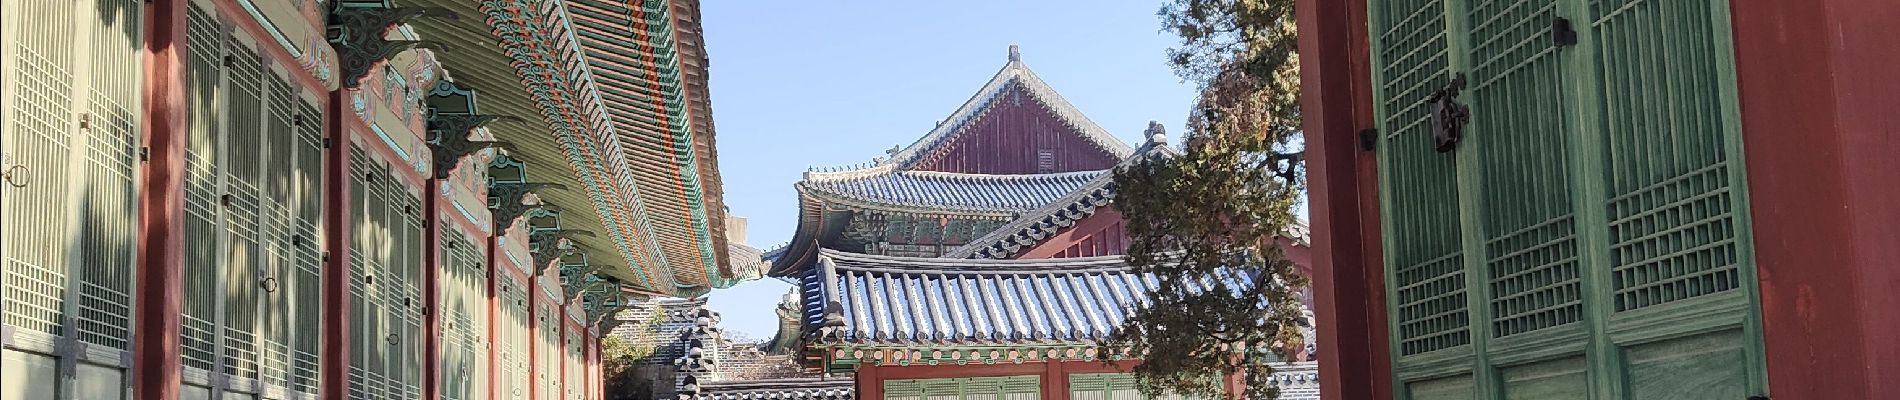 Tour Wandern Unknown - Changdeokgung palace - Photo